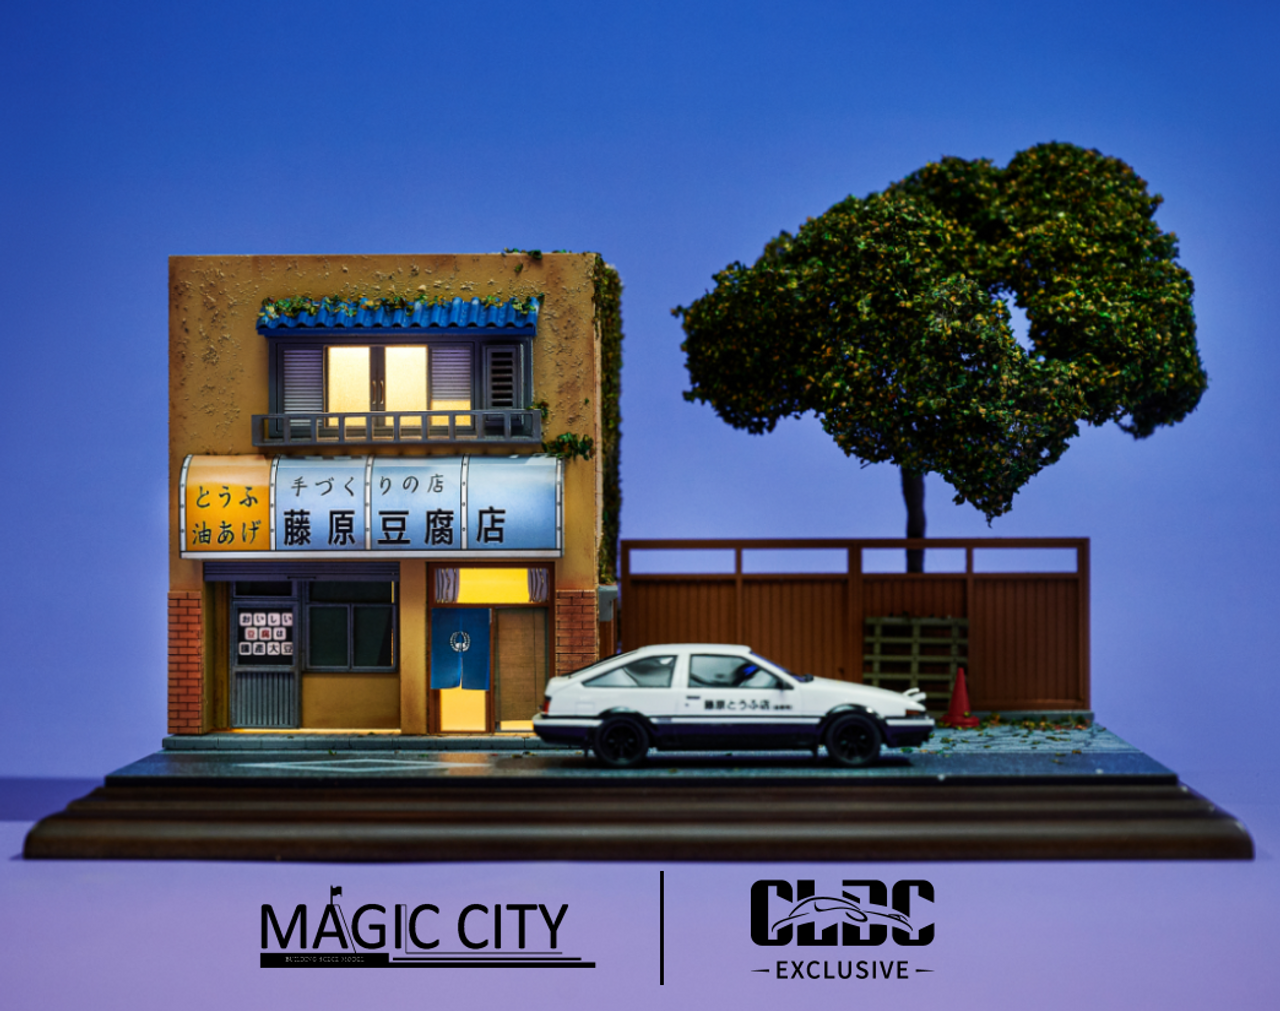 1/43 Magic City Initial D Fujiwara Tofu Shop Diorama Model (cars & figures NOT included)